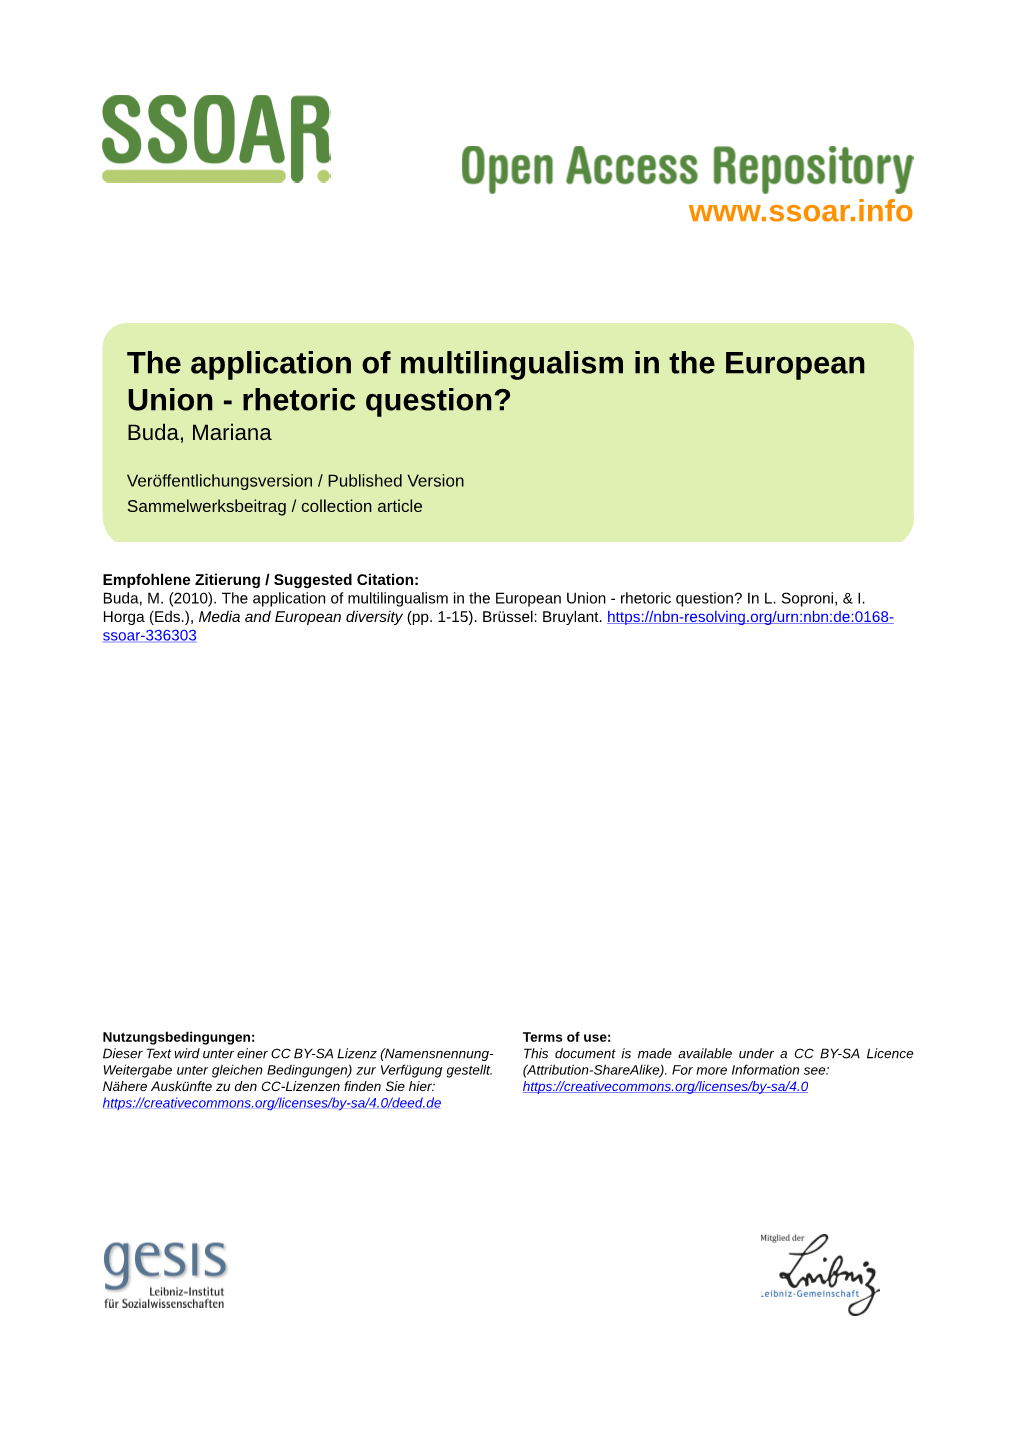 The Application of Multilingualism in the European Union - Rhetoric Question? Buda, Mariana